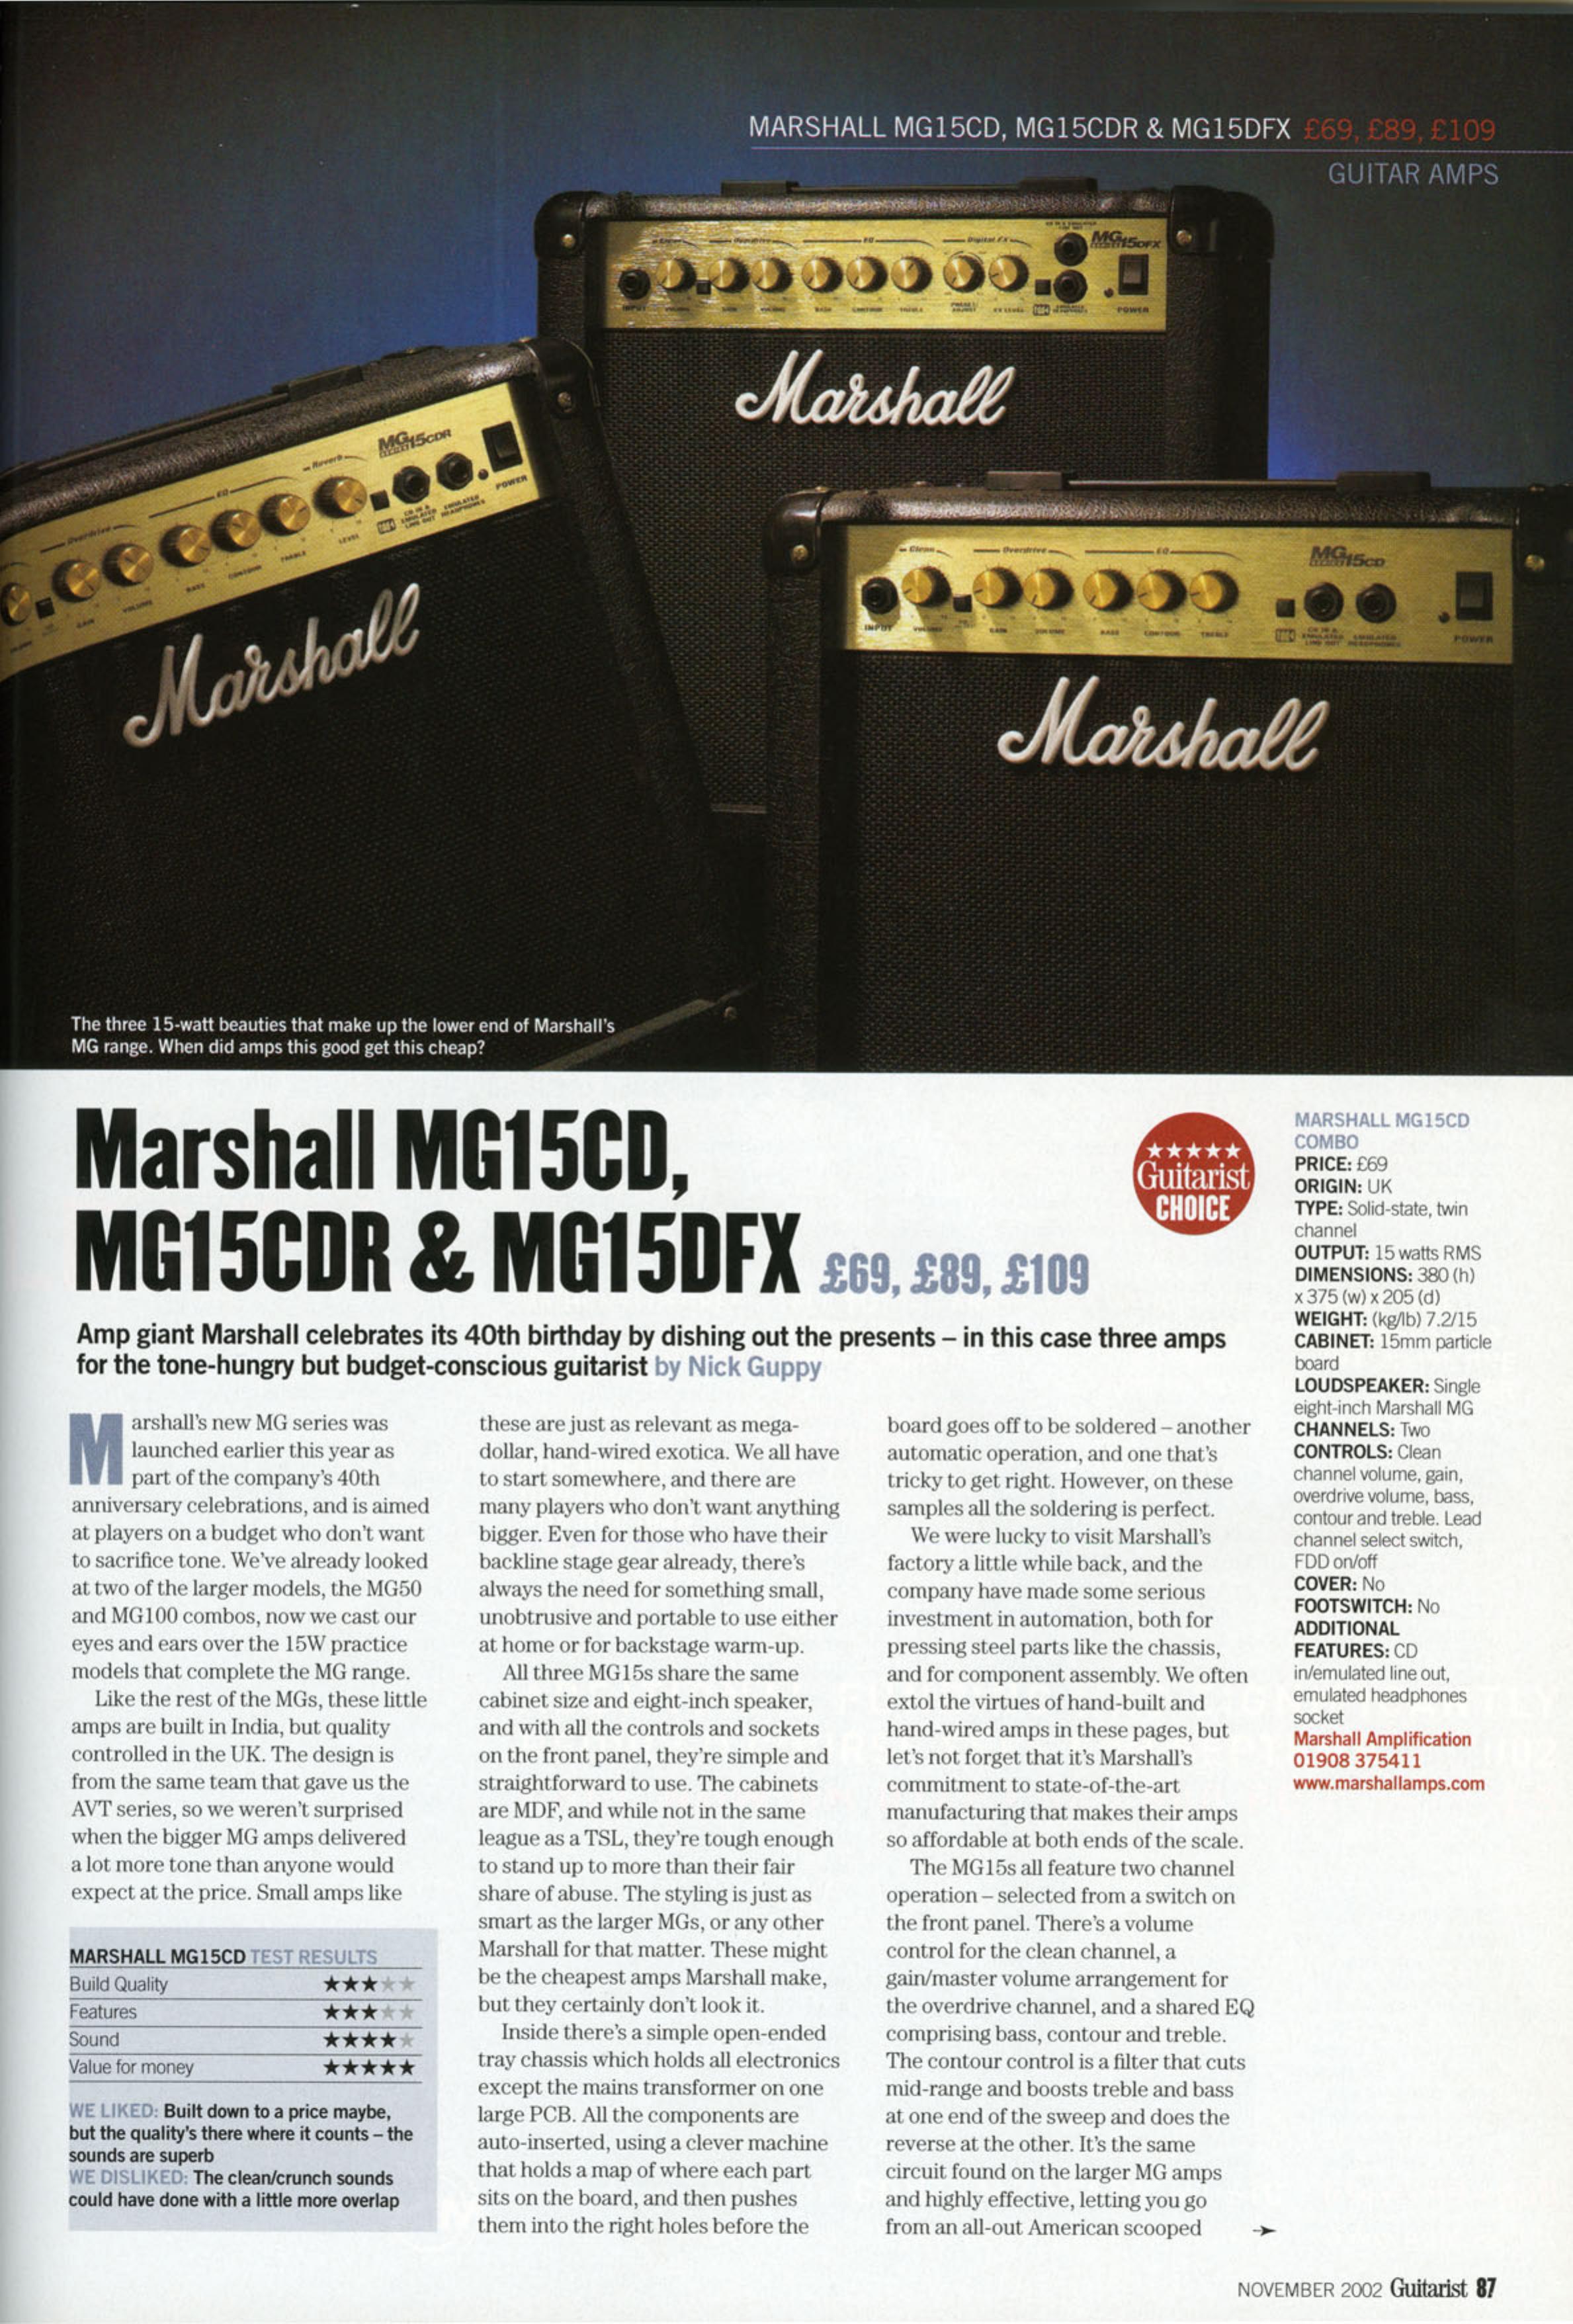 Marshall Amplification MG15CD Musical Instrument Amplifier User Manual